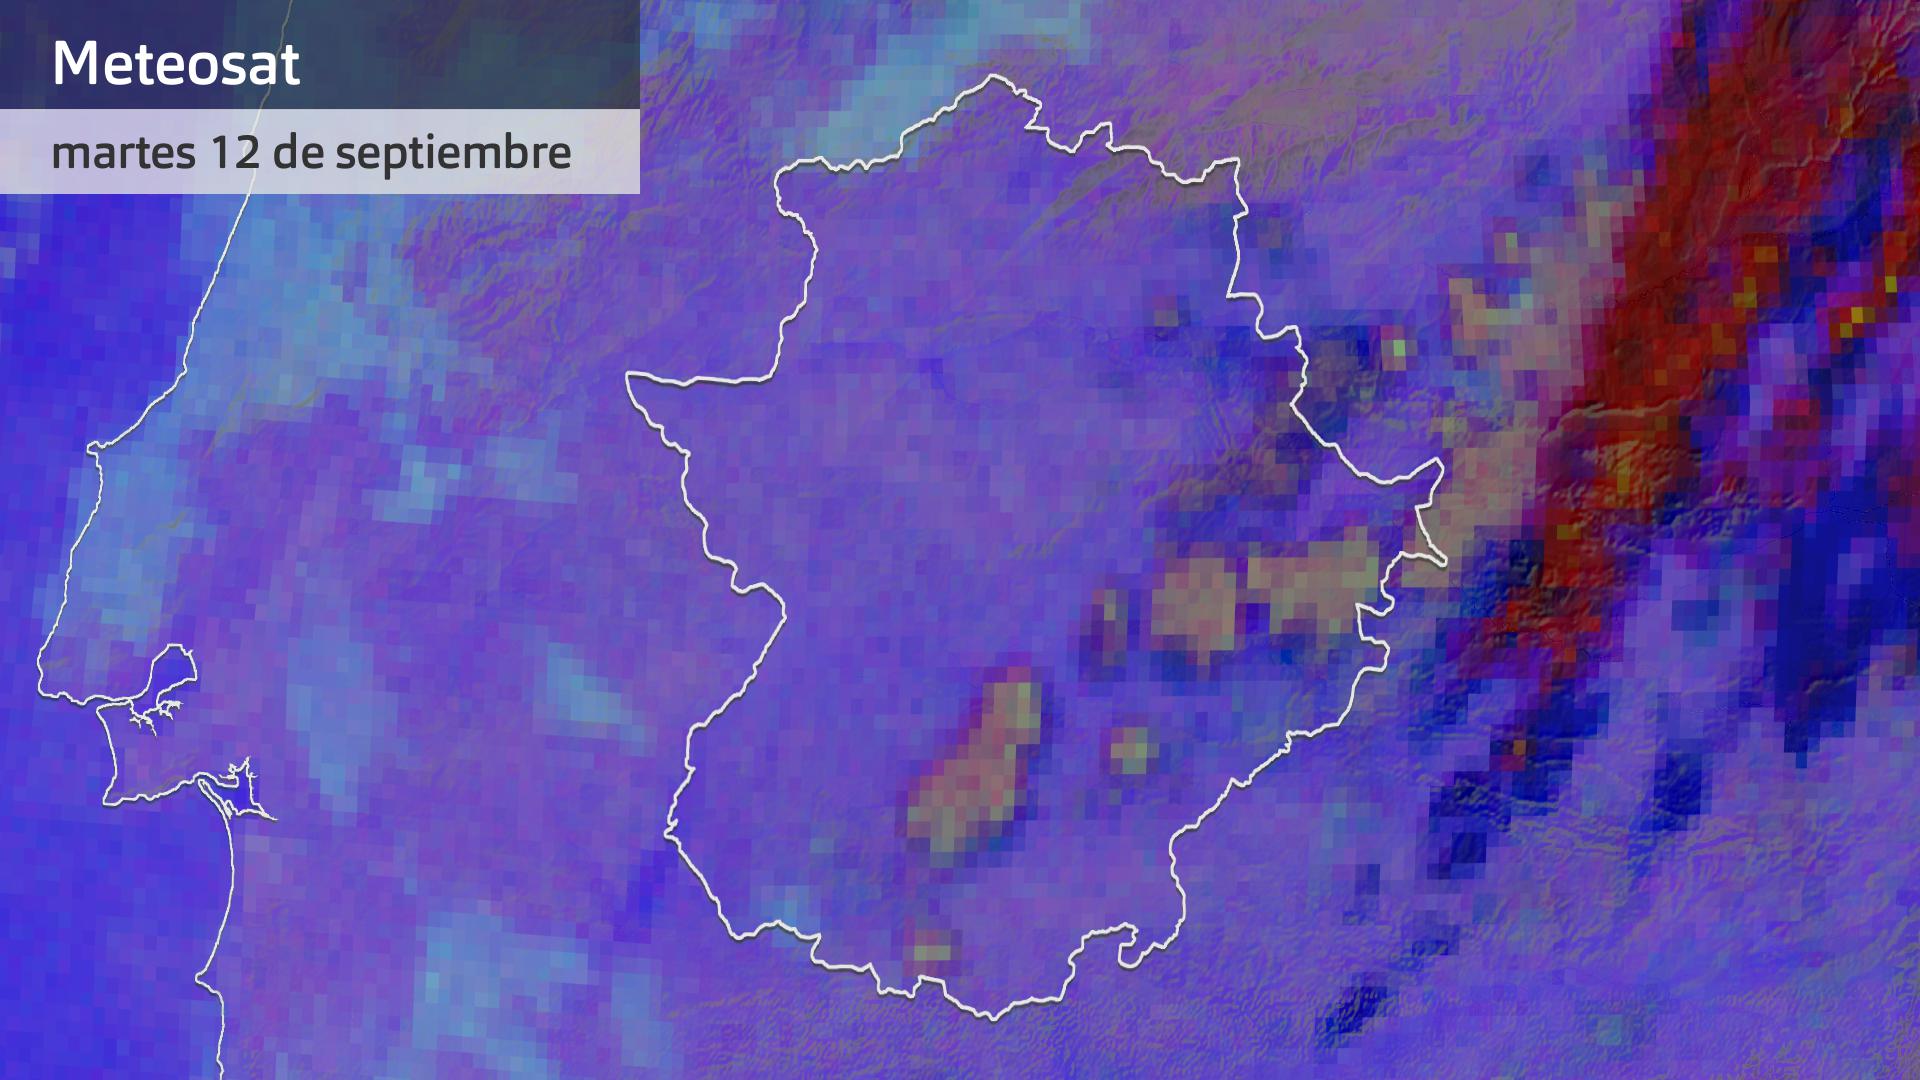 Imagen del Meteosat martes 12 de septiembre 5:30 h.